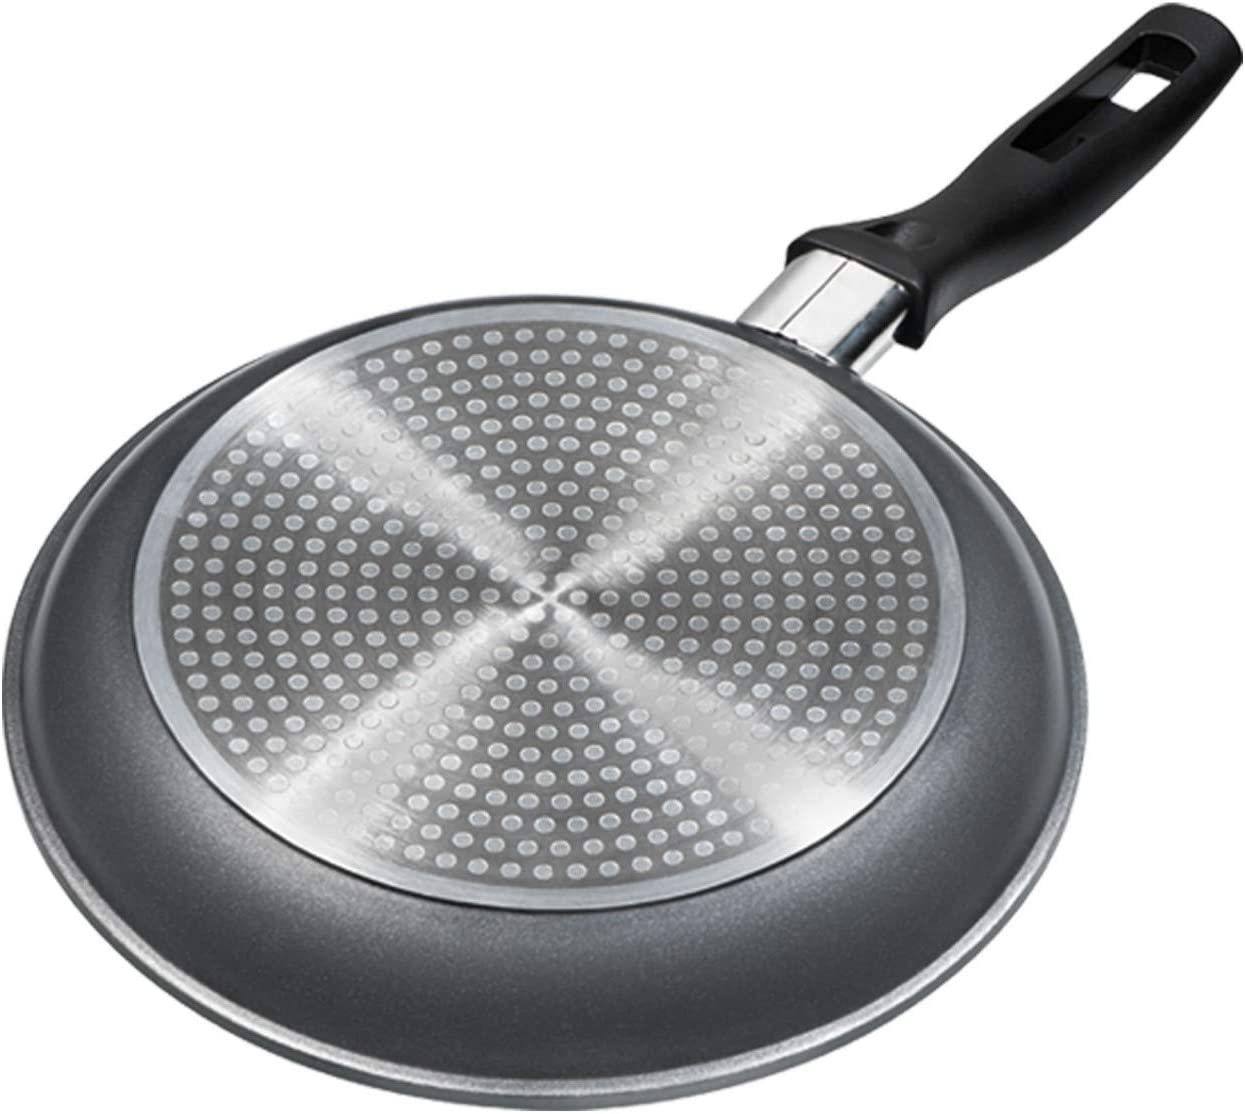 Warimex Stoneline 5Pcs Aluminium Cookware Set Stewing Pot Saucepan Frying Pan Glass Lids Suitable Induction - Homeware Discounts